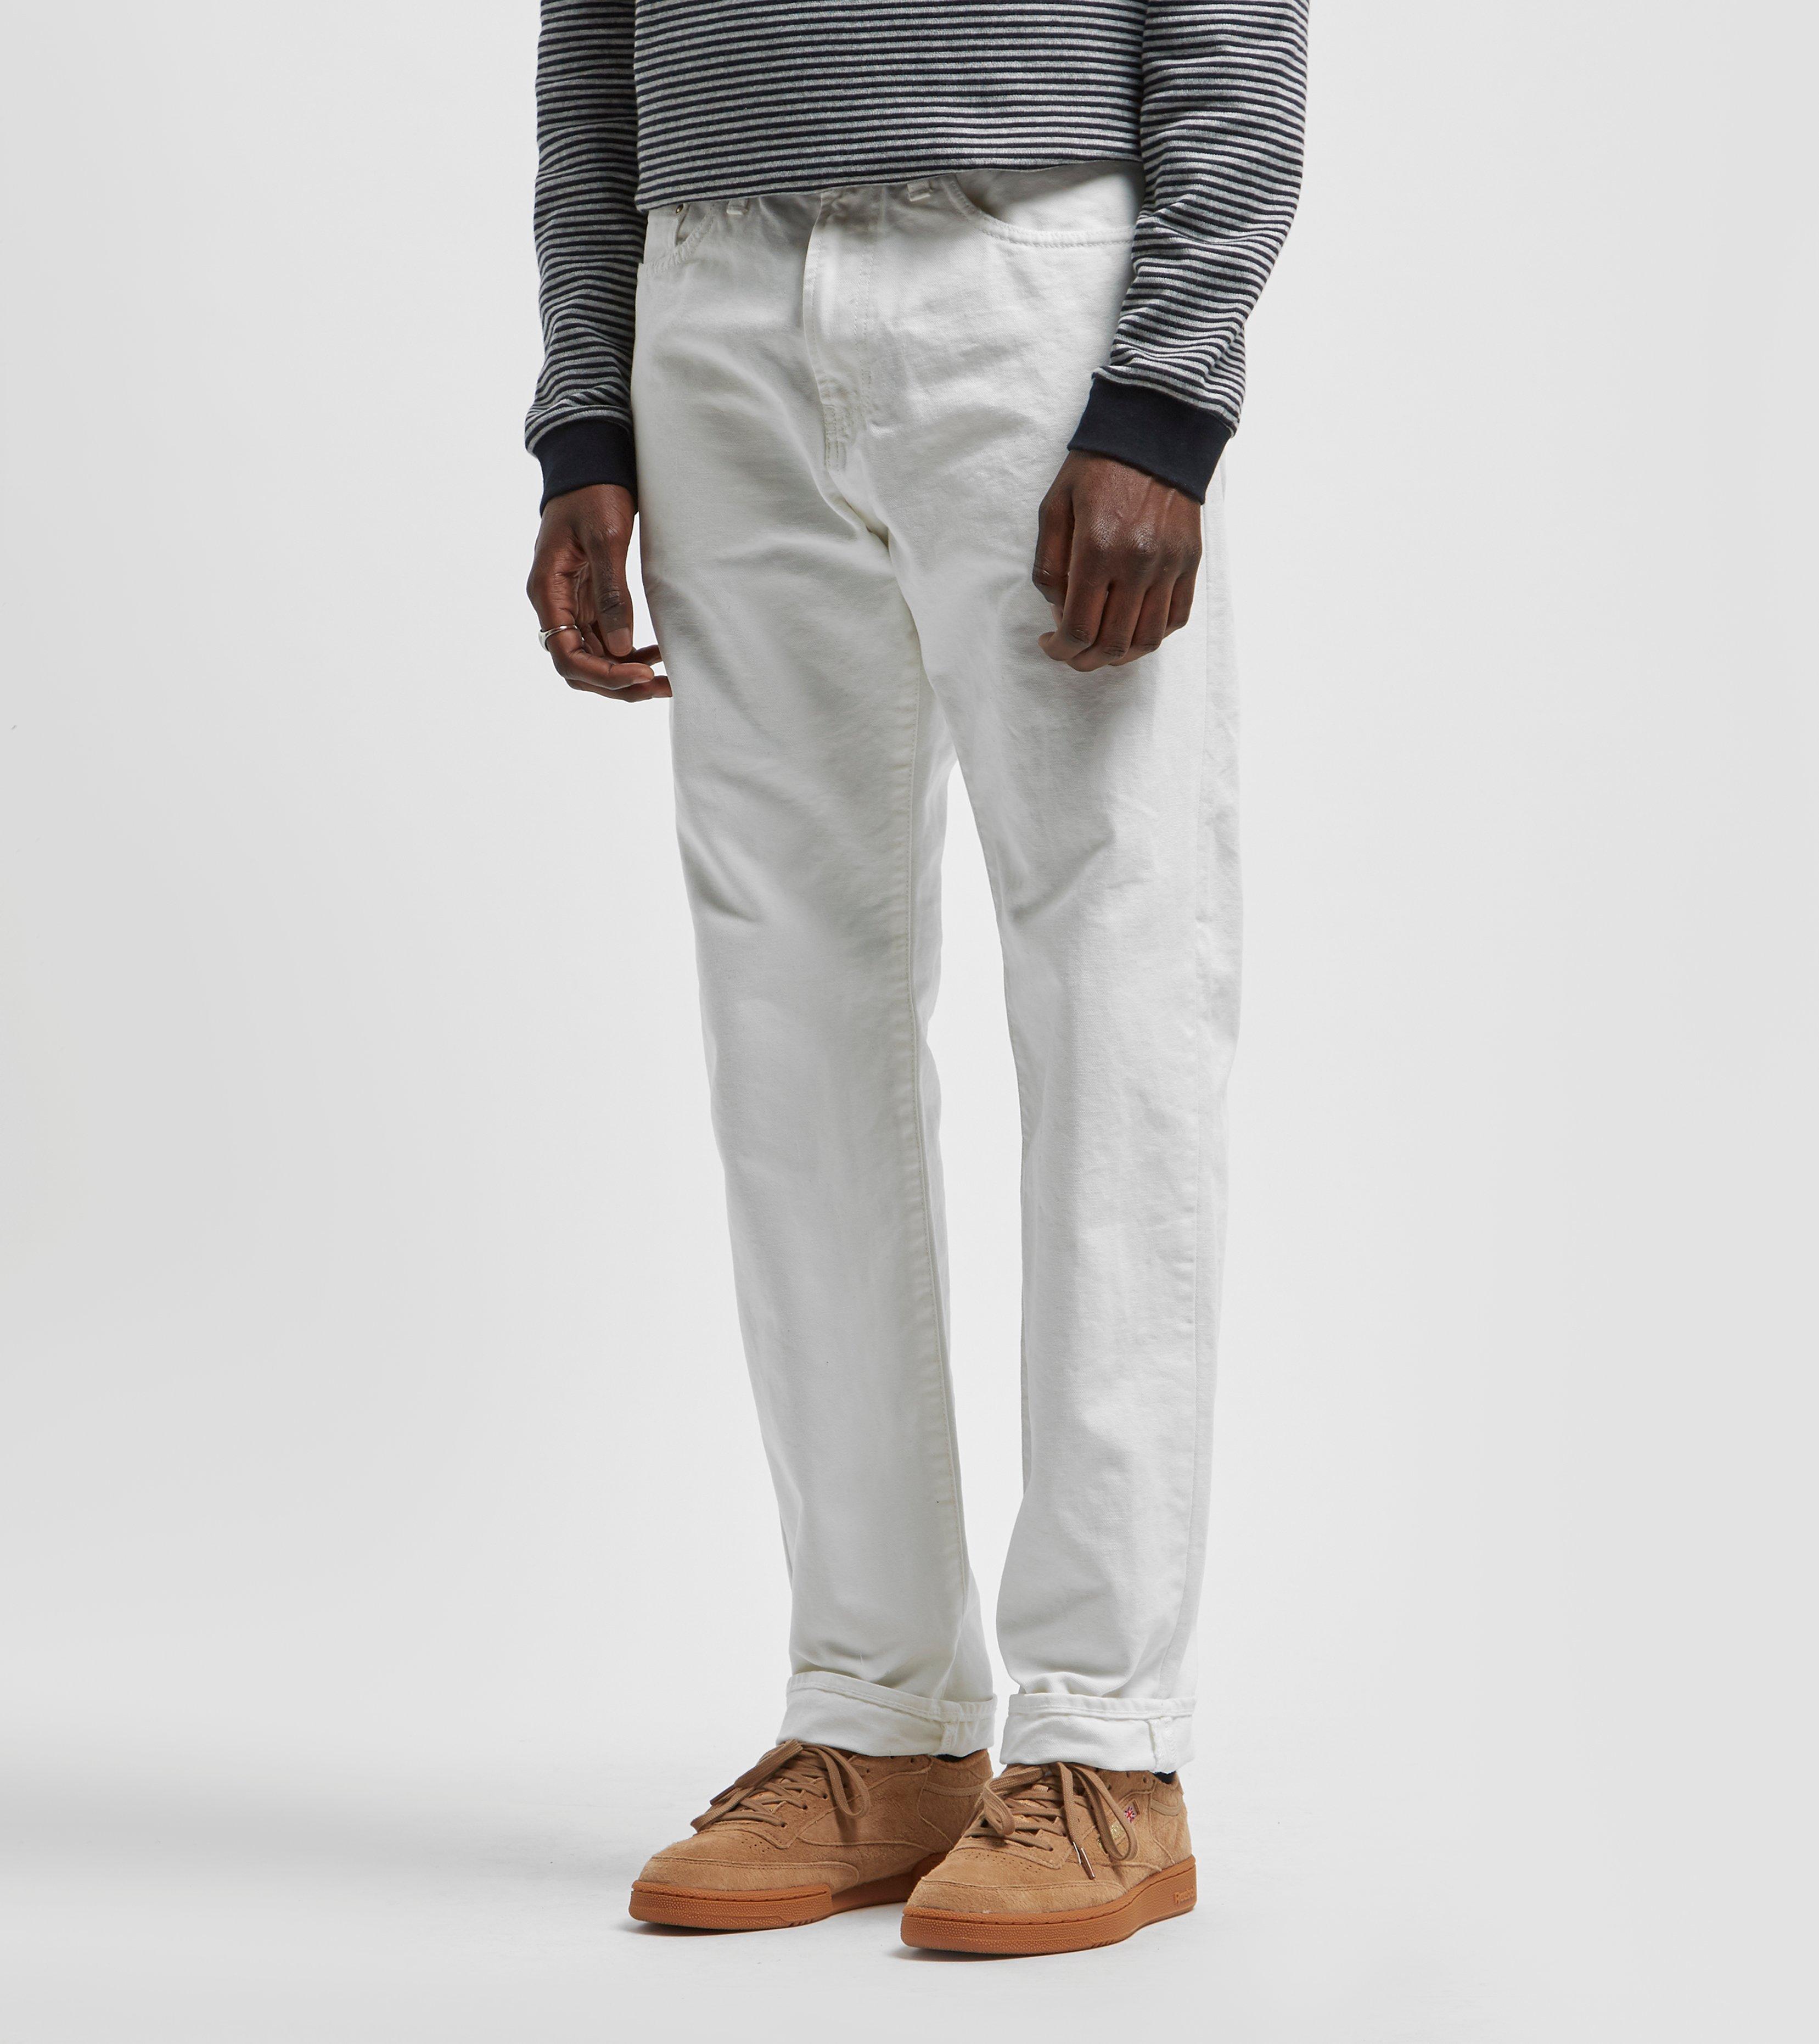 Carhartt WIP Pontiac Pant in White for Men - Lyst